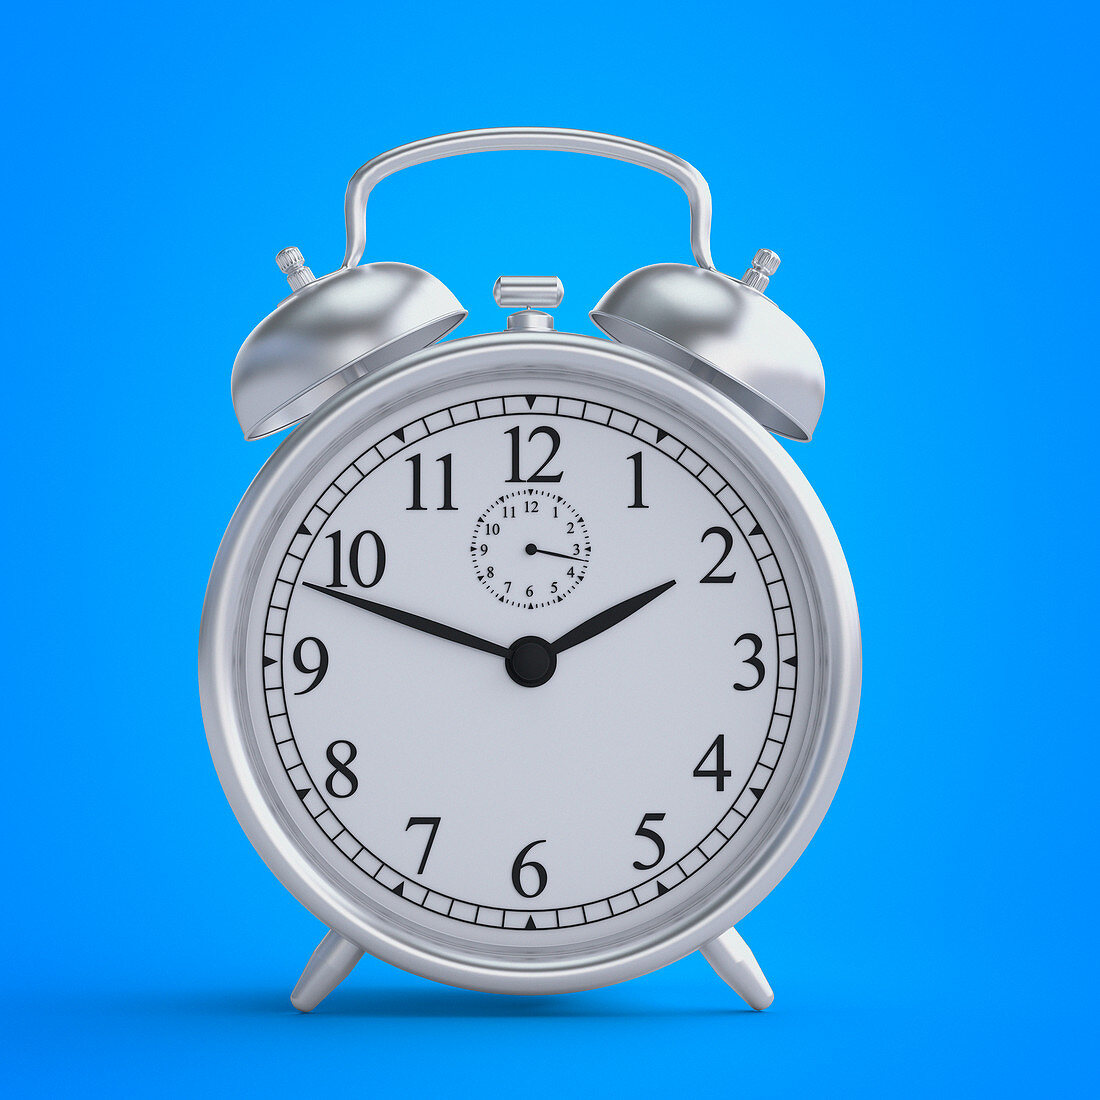 Illustration of a alarm clock